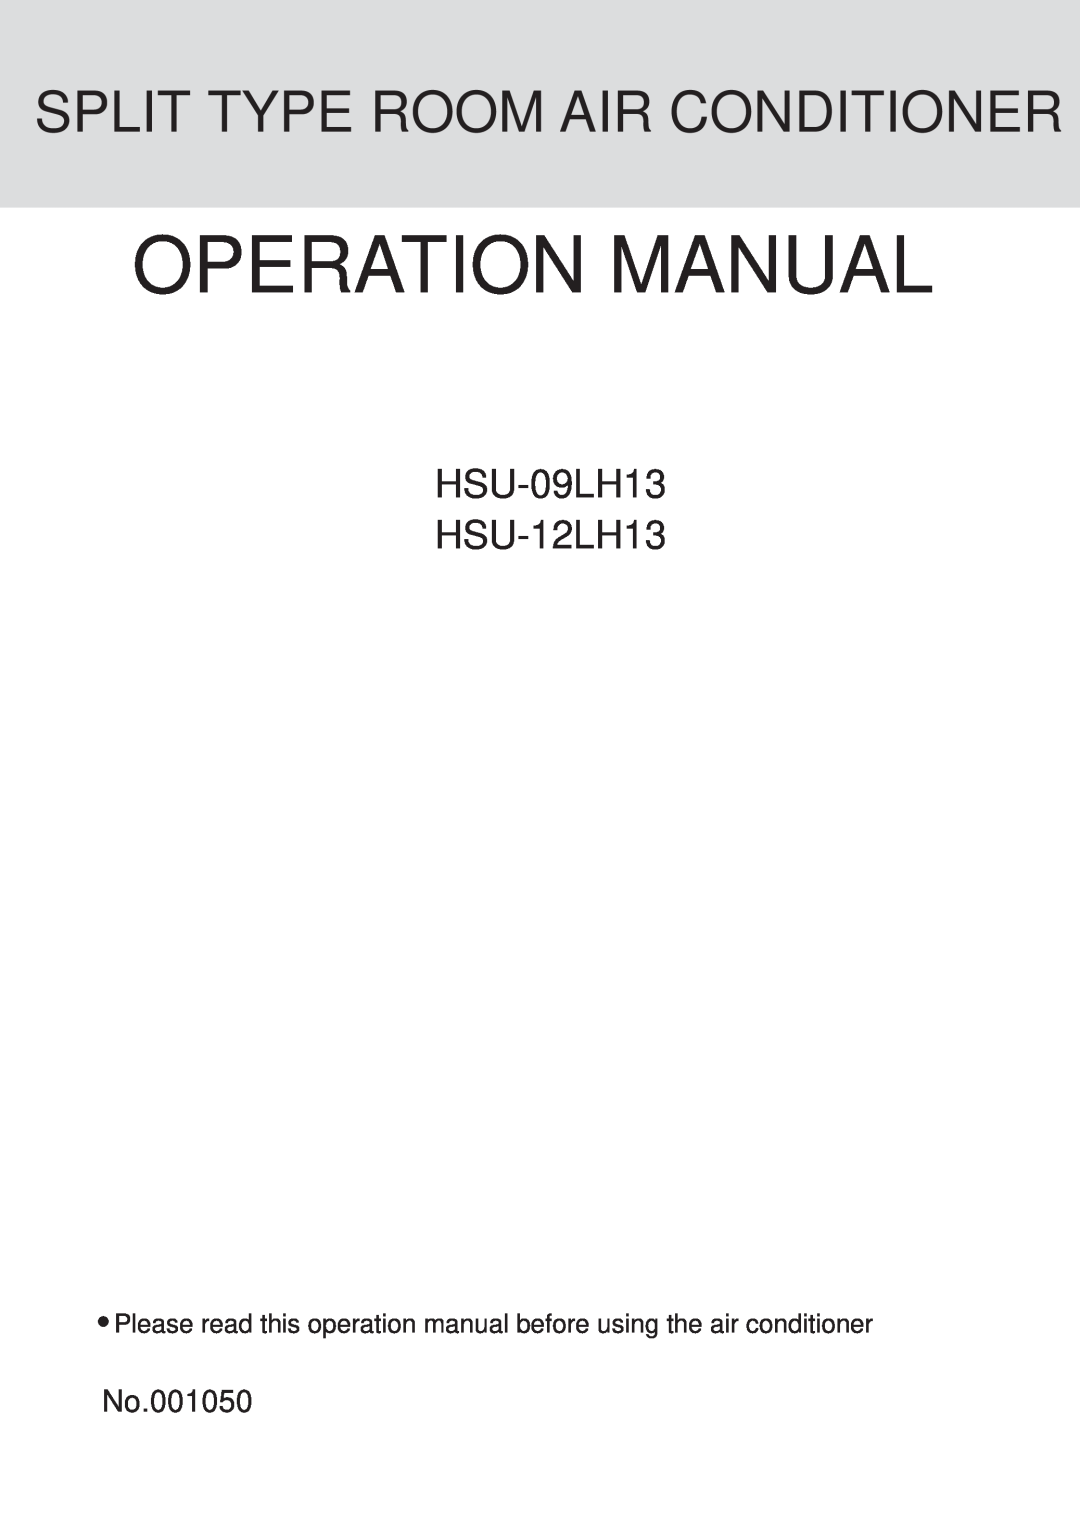 Haier operation manual HSU-09LH13 HSU-12LH13, No.001050, Split Type Room Air Conditioner 